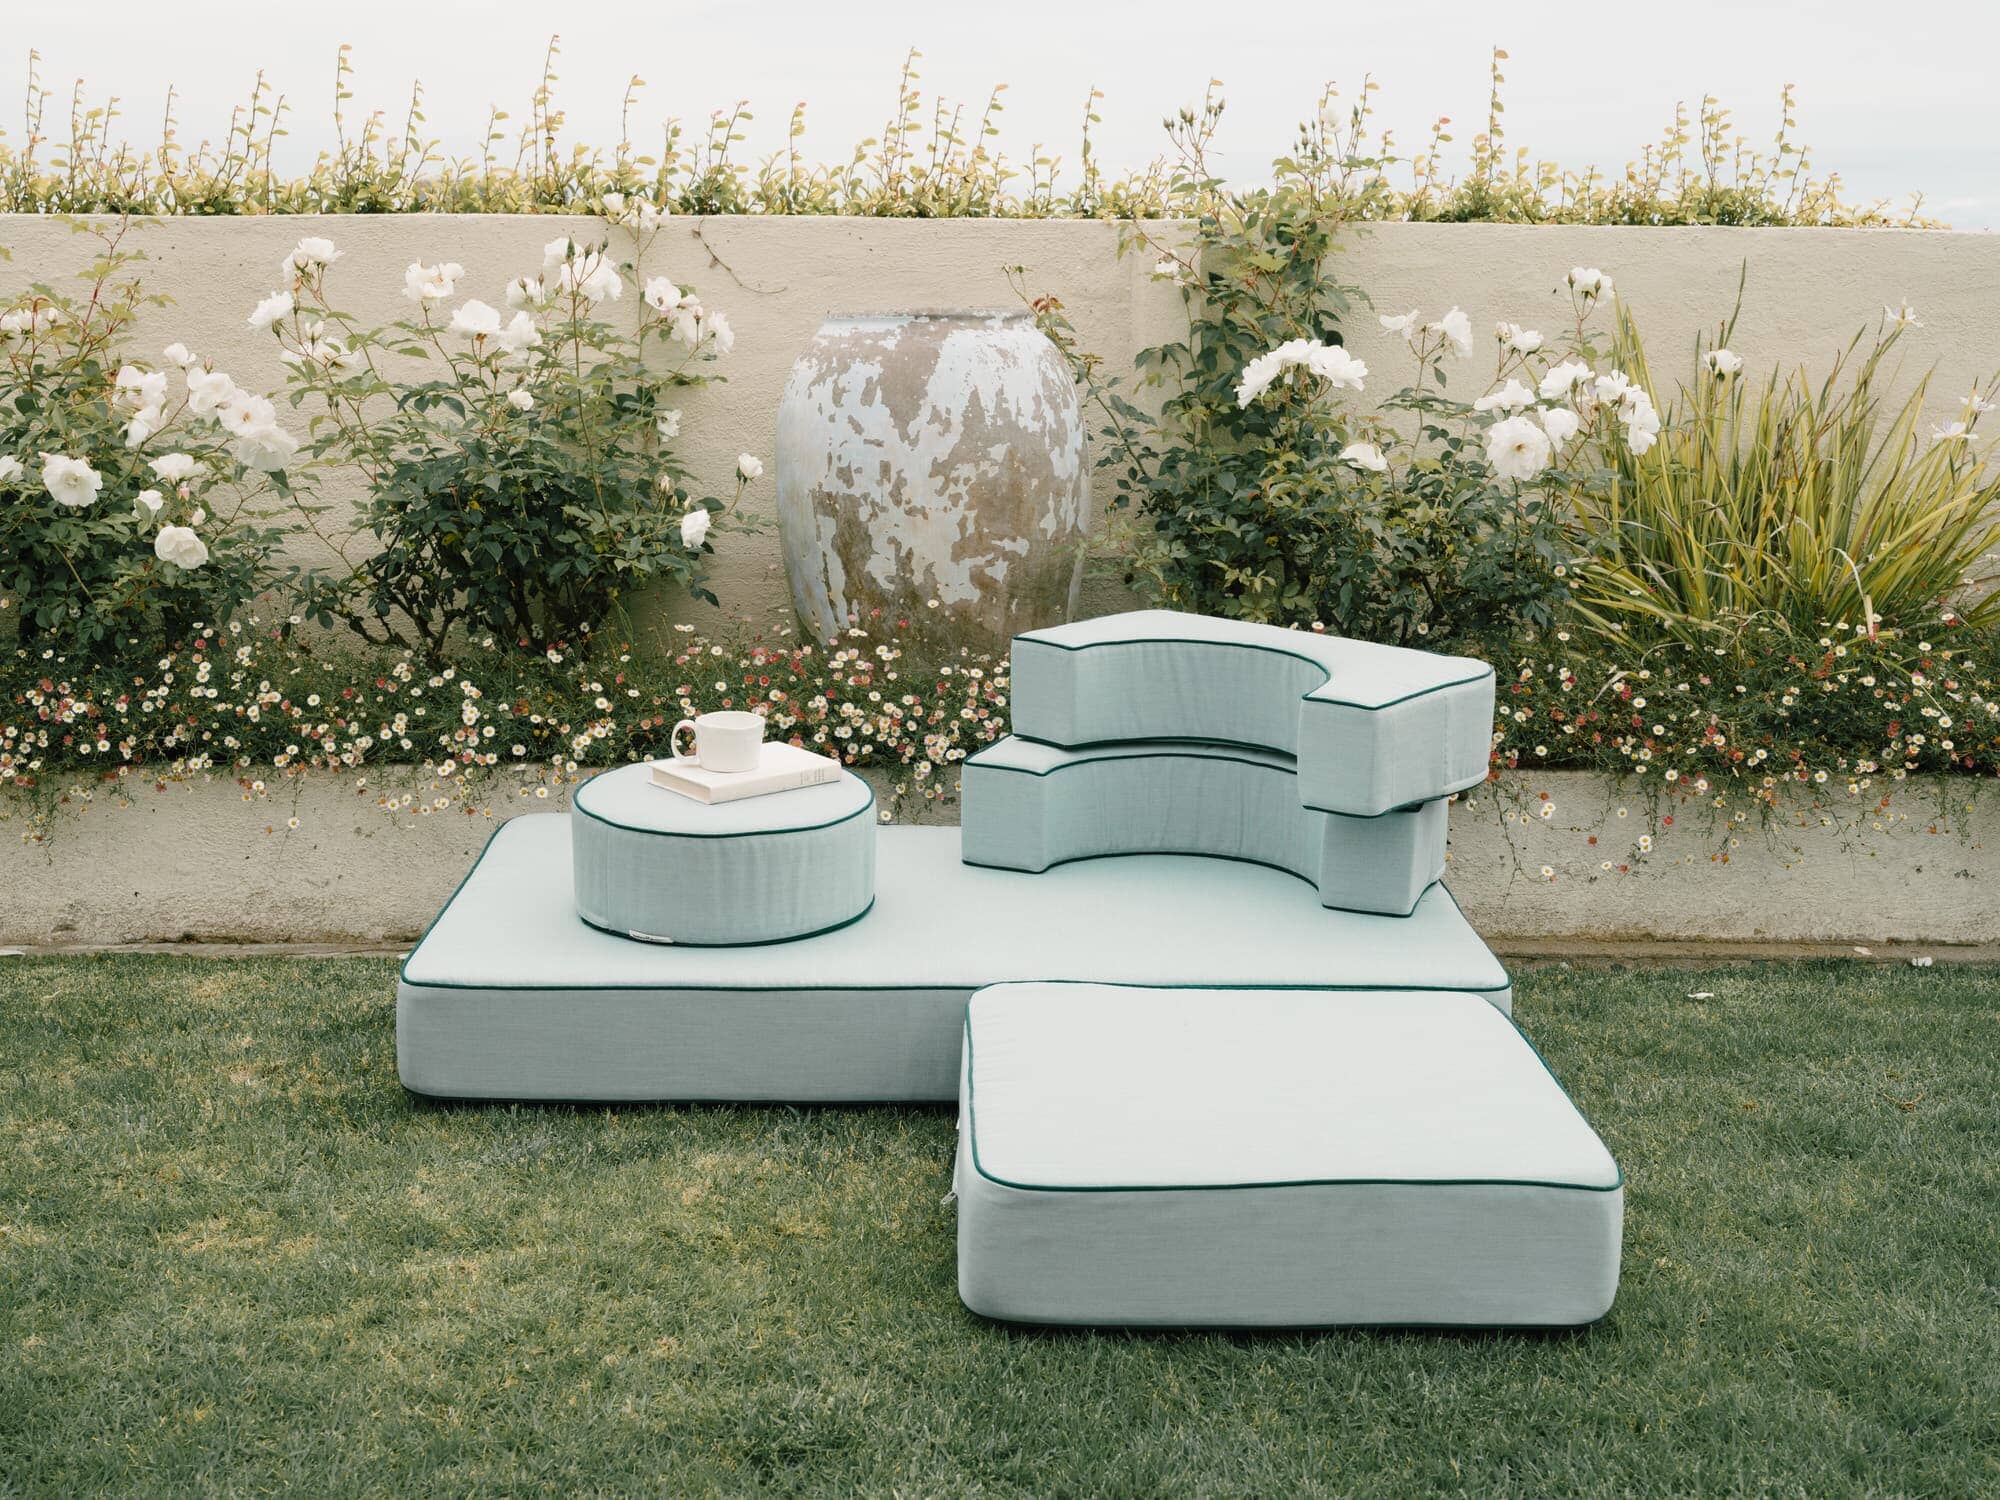 Riviera green modular pillow stack in a garden setting